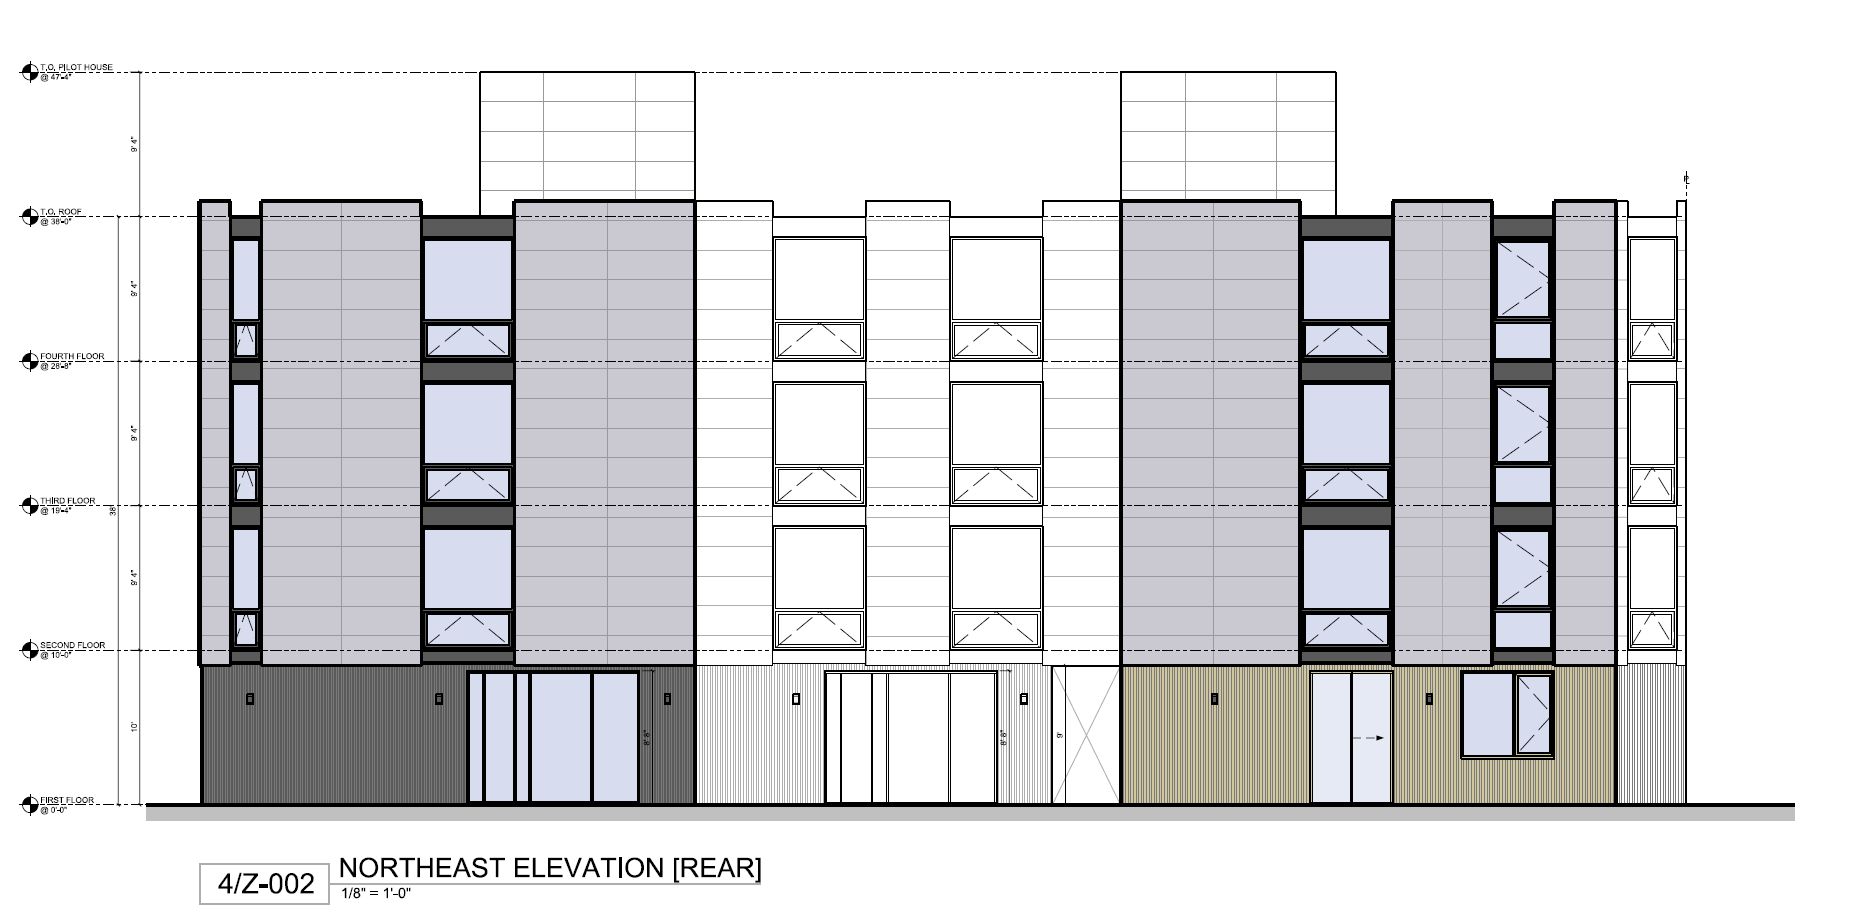 1437 South 58th Street. Building elevation. Credit: Studio C Architecture via the City of Philadelphia